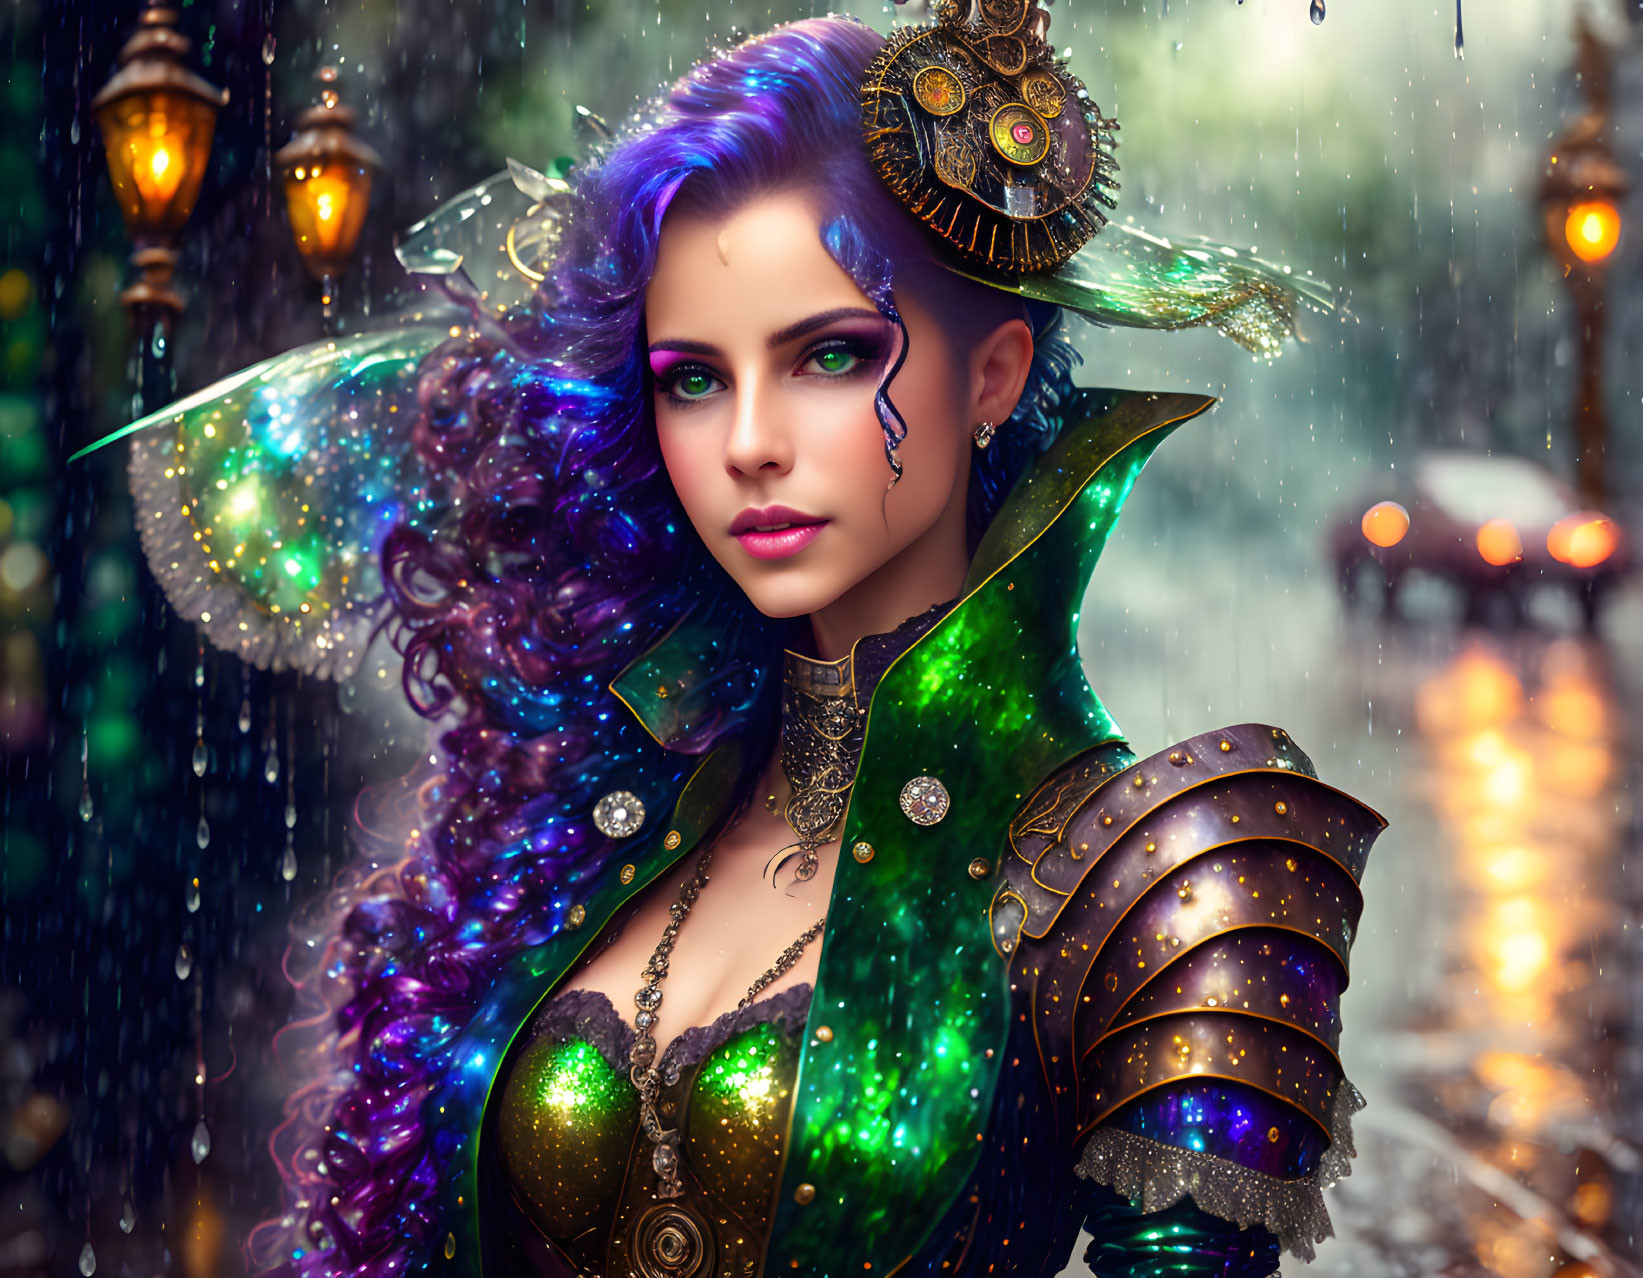 Vibrant purple hair woman in green fantasy armor under falling snowflakes